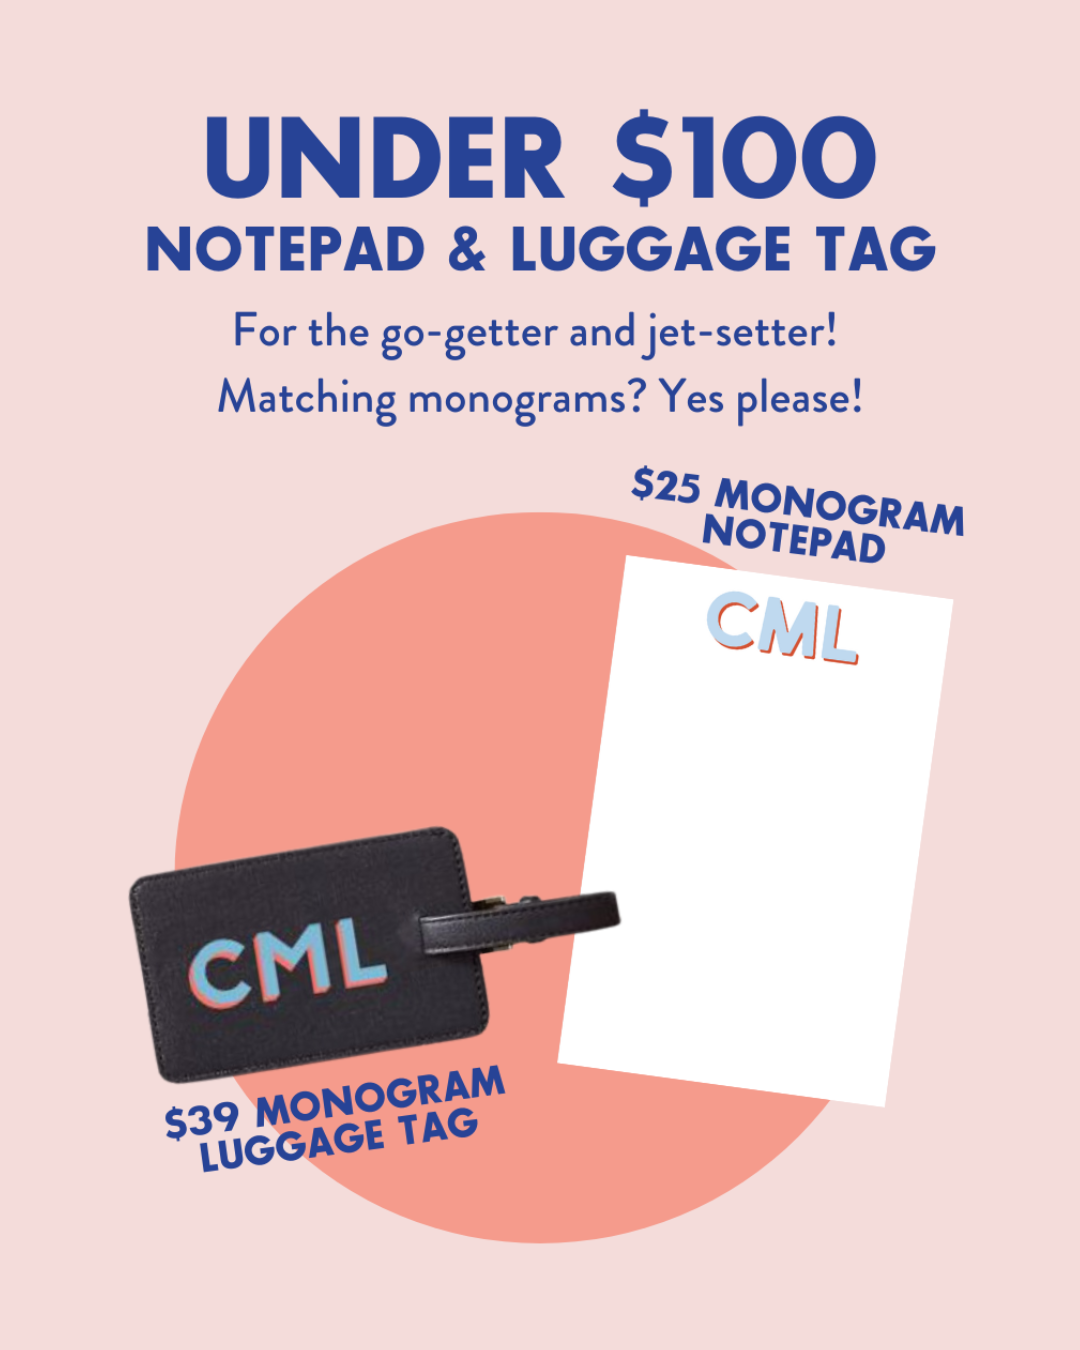 Graduation Gift Under $100 - Notepad & Luggage Tag